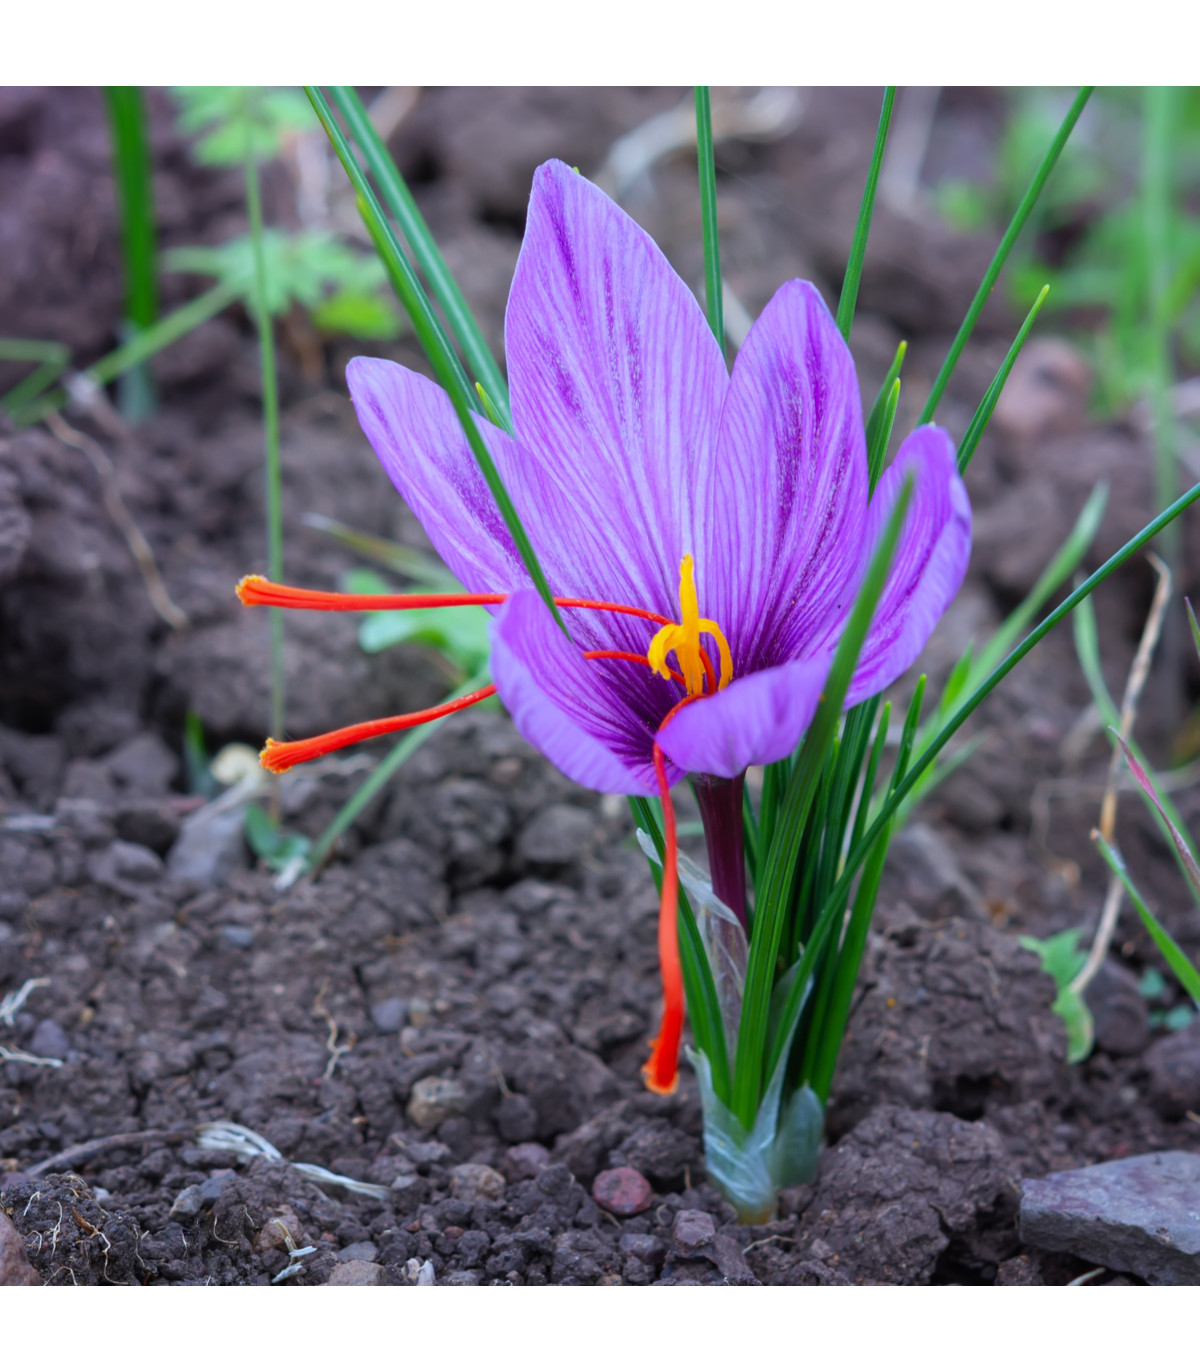 Šafrán setý - Crocus sativus - hlízy šafránů - 3 ks